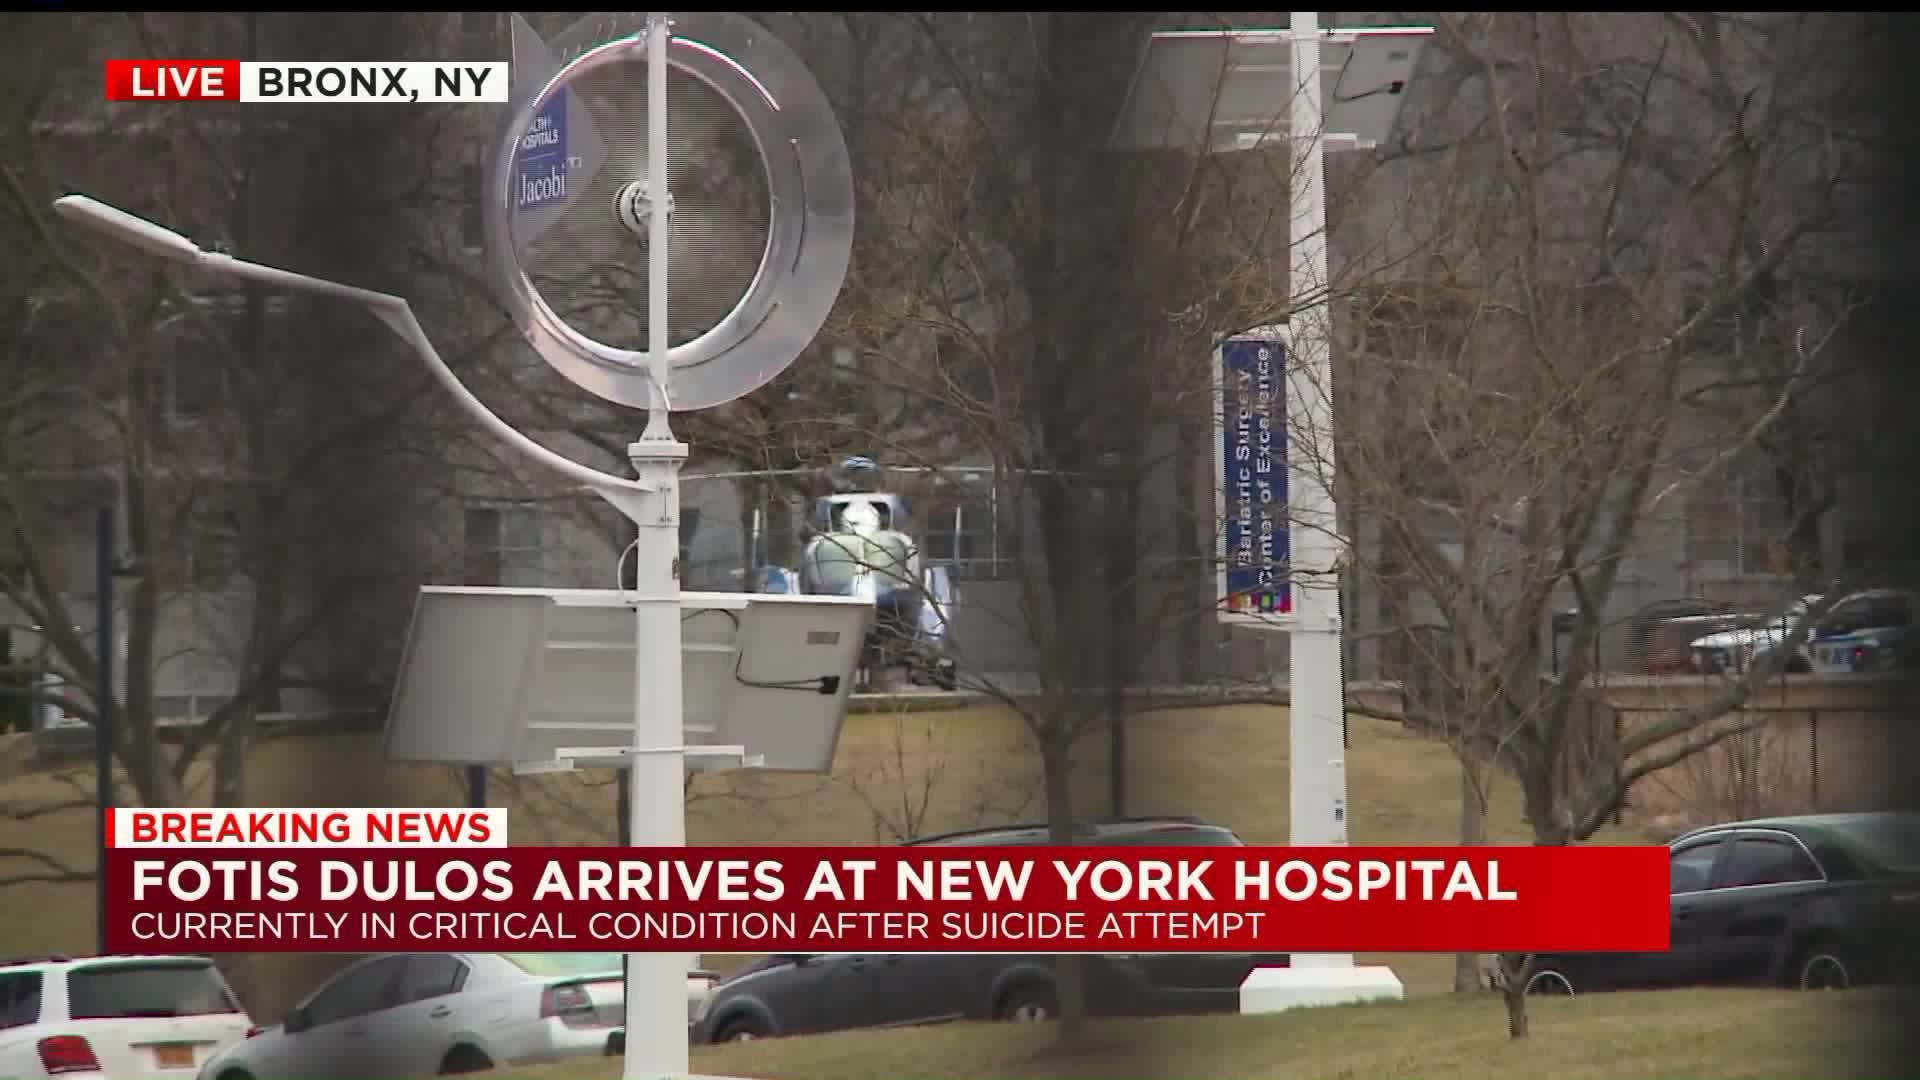 Fotis Dulos arrives at New York hospital